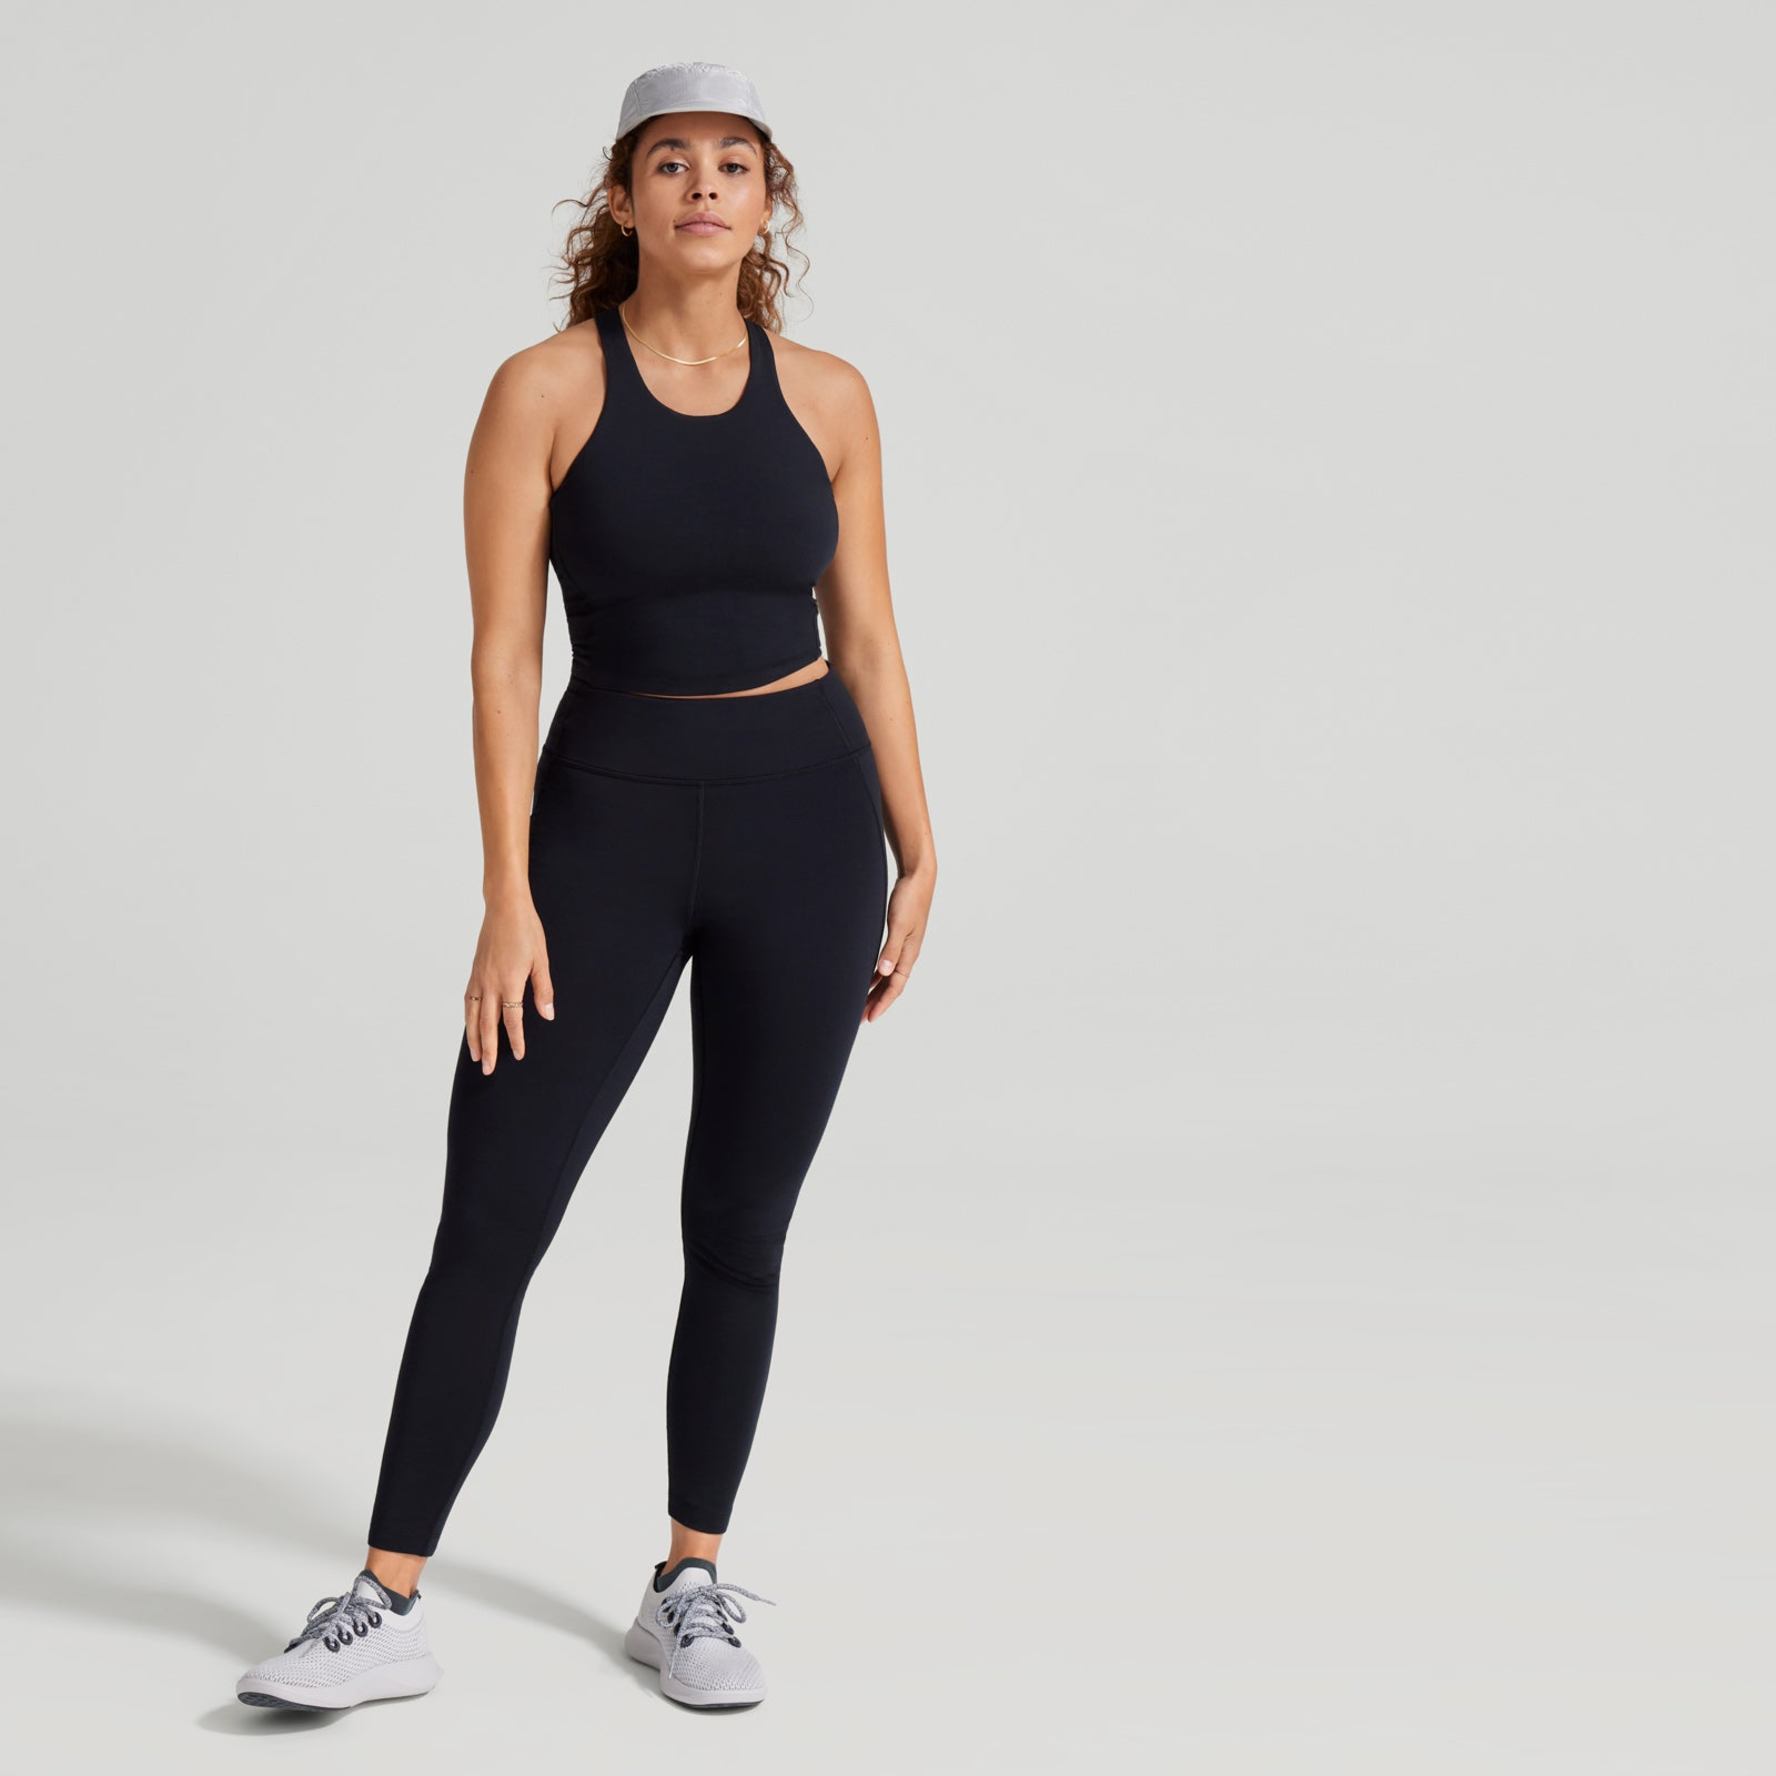 JUMP USA Women Wild Grey & Black Rapid-Dry Fit Running Tights